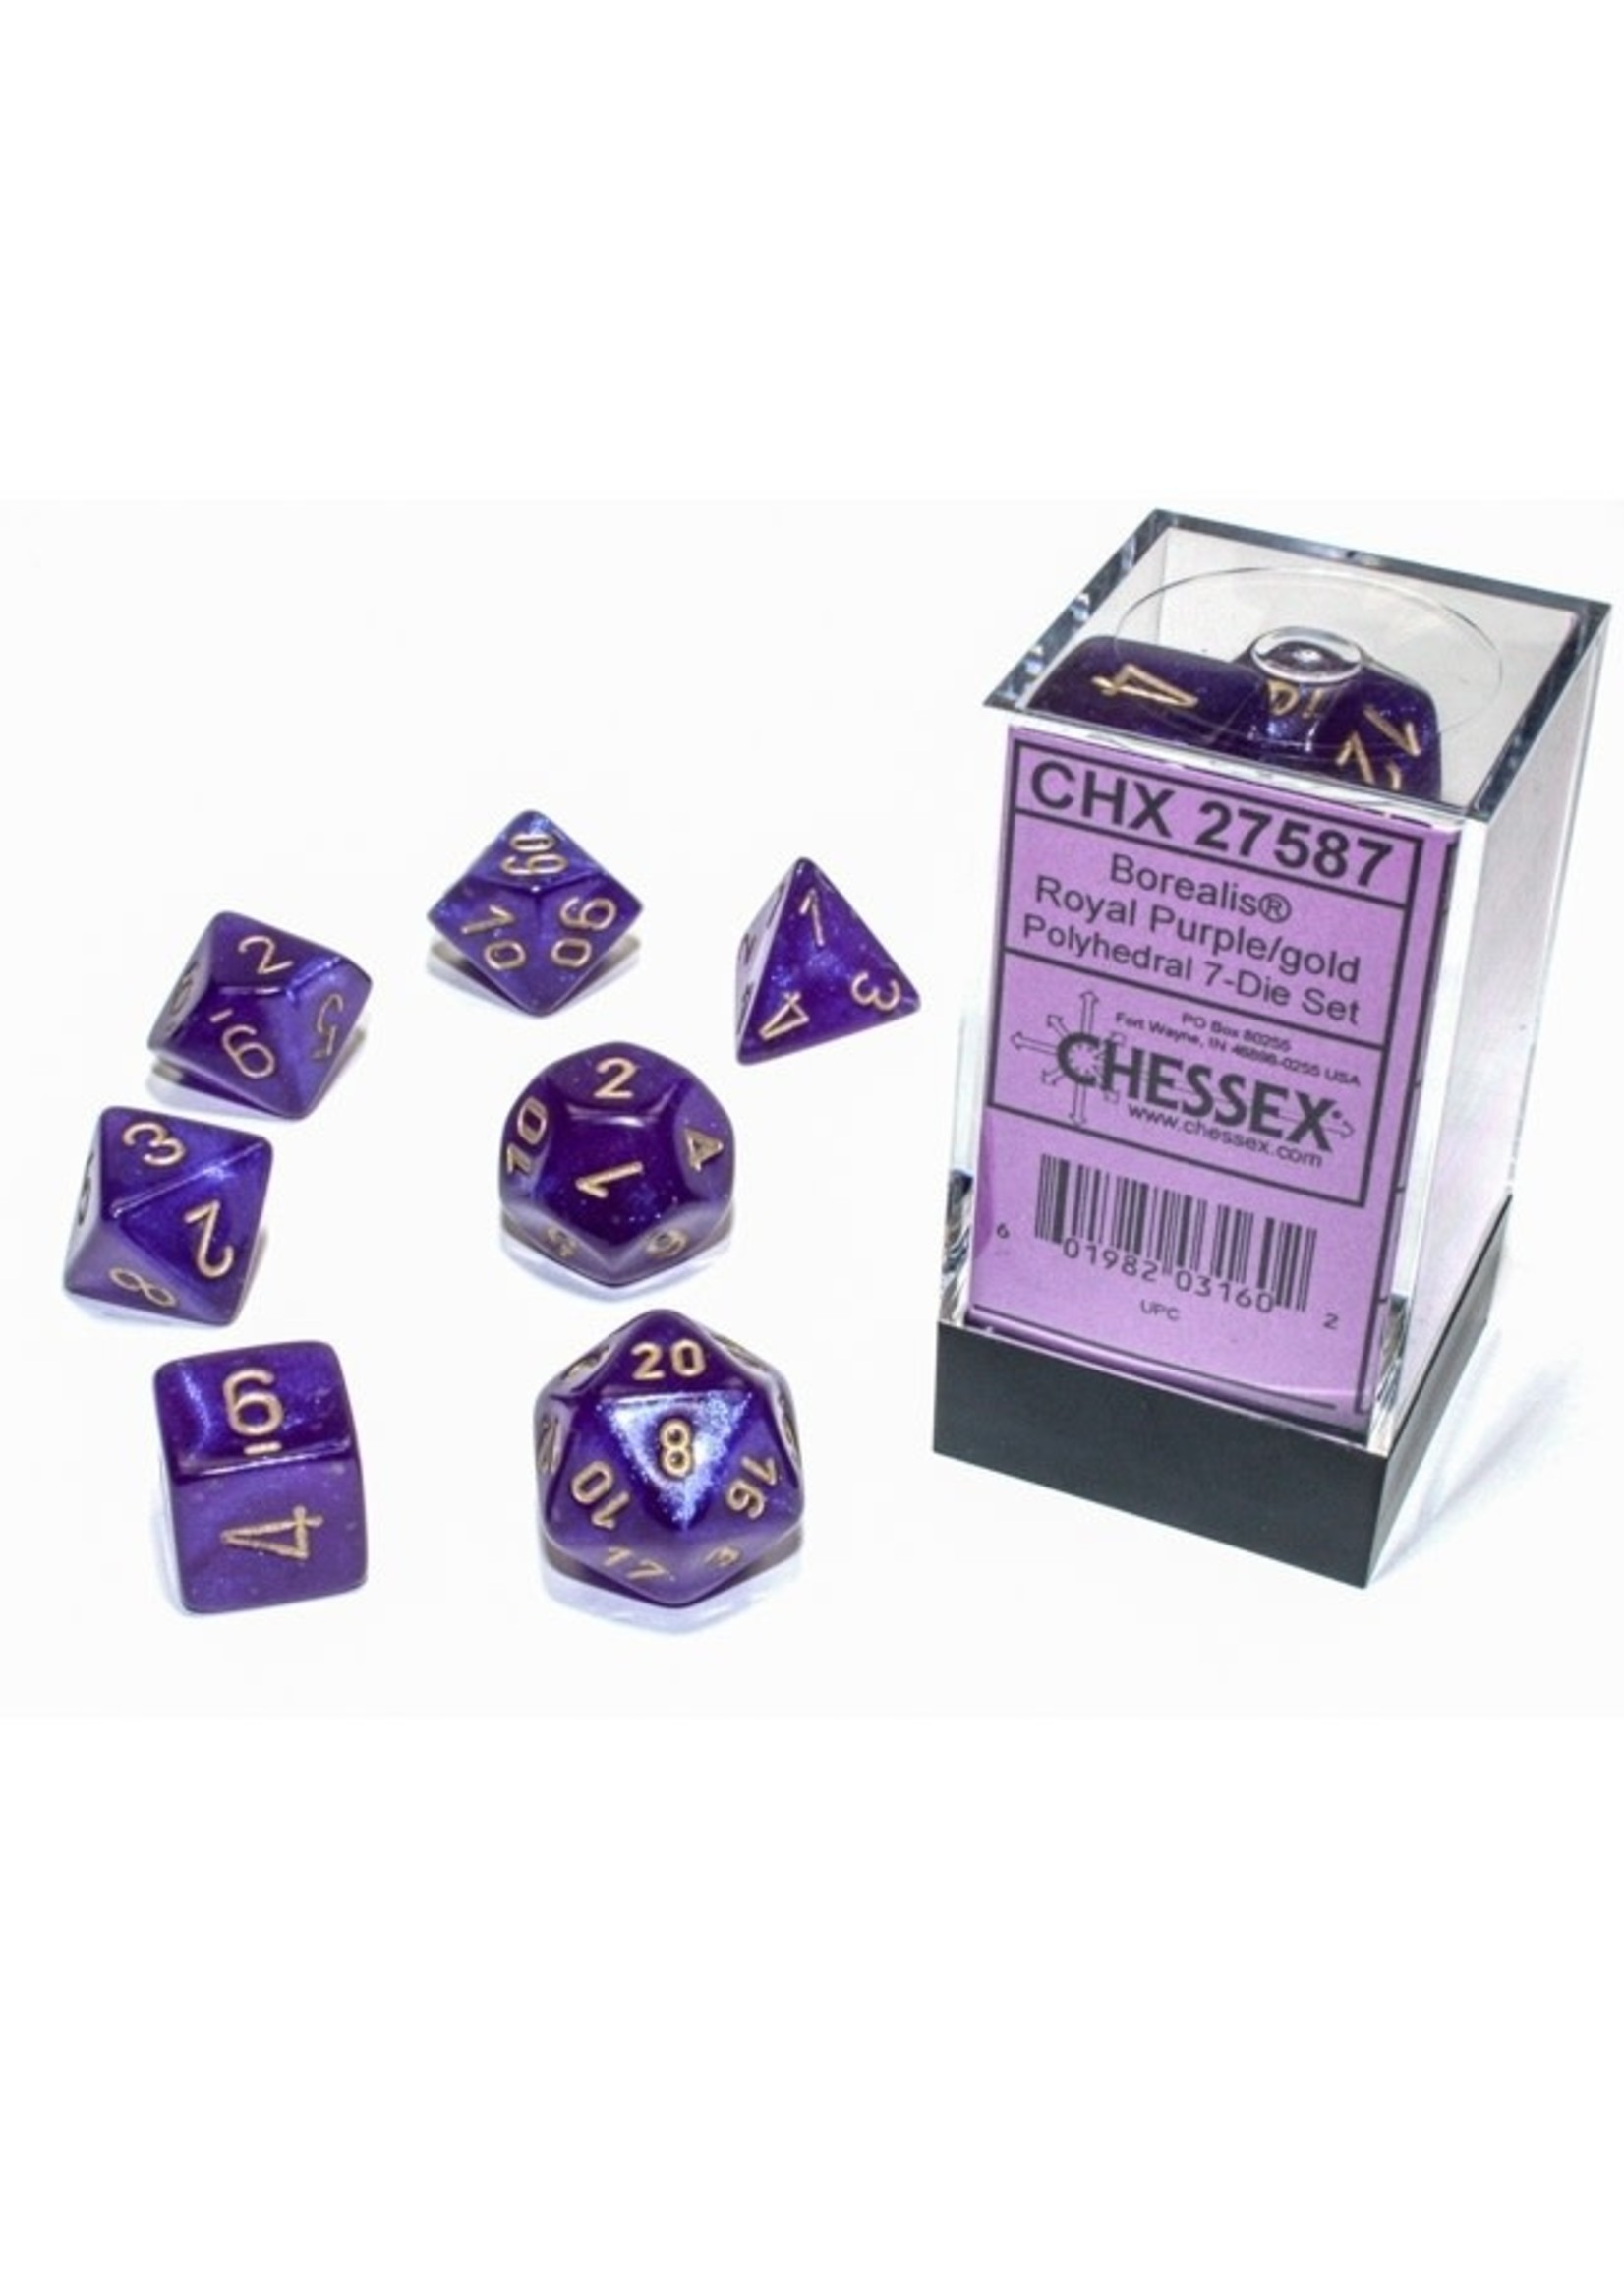 Chessex Borealis Luminary Poly 7 set: Royal Purple w/ Gold